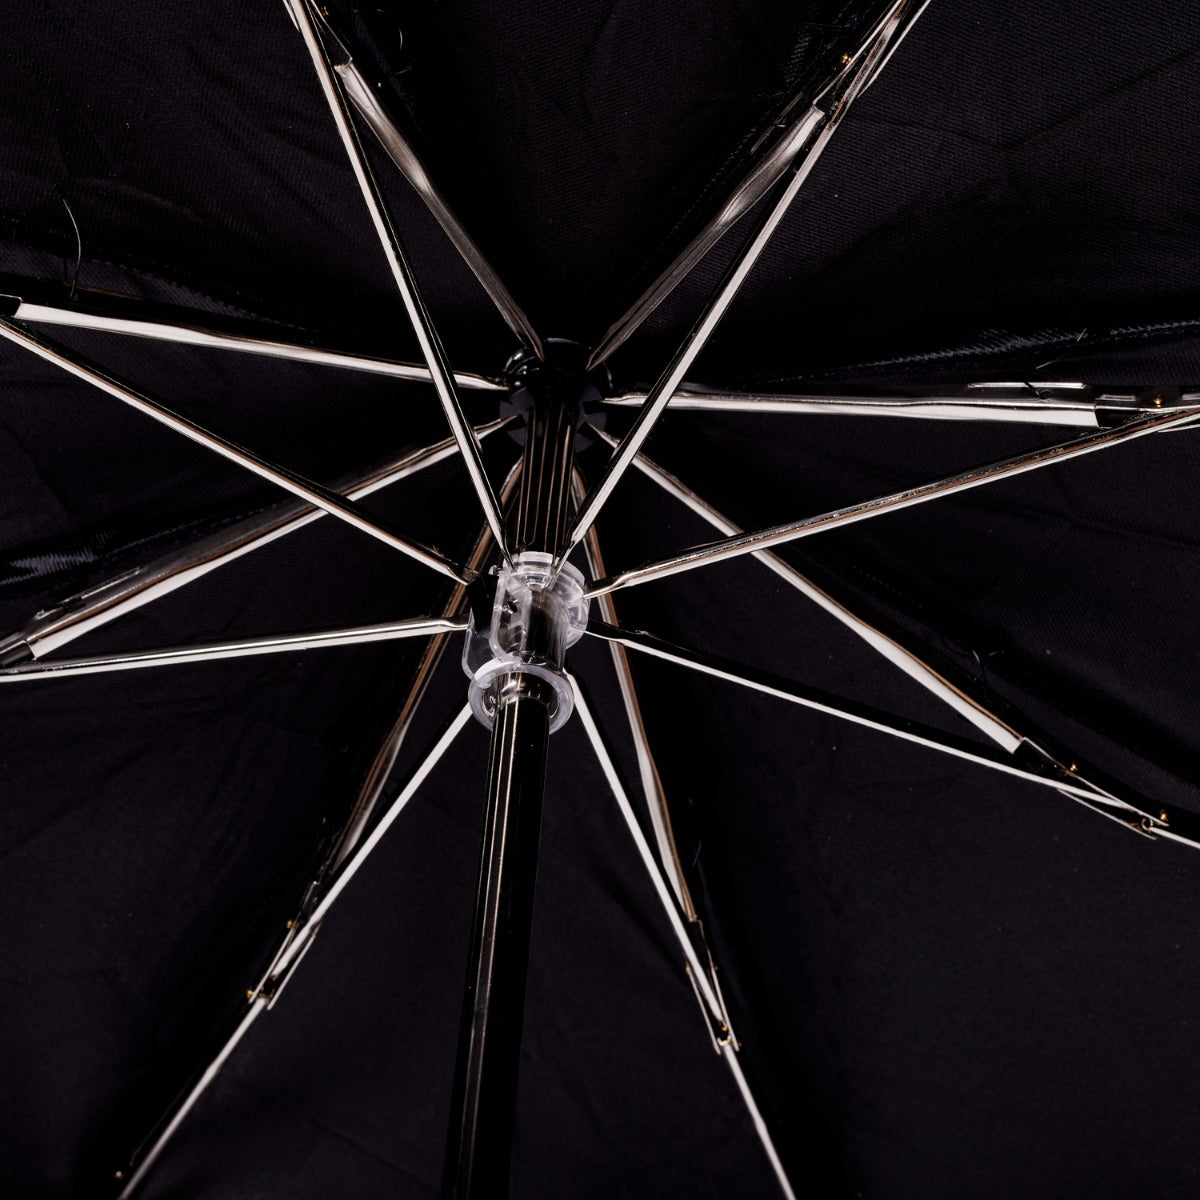 A close up of a handmade Black Alligator Travel Umbrella with Black Canopy by KirbyAllison.com.